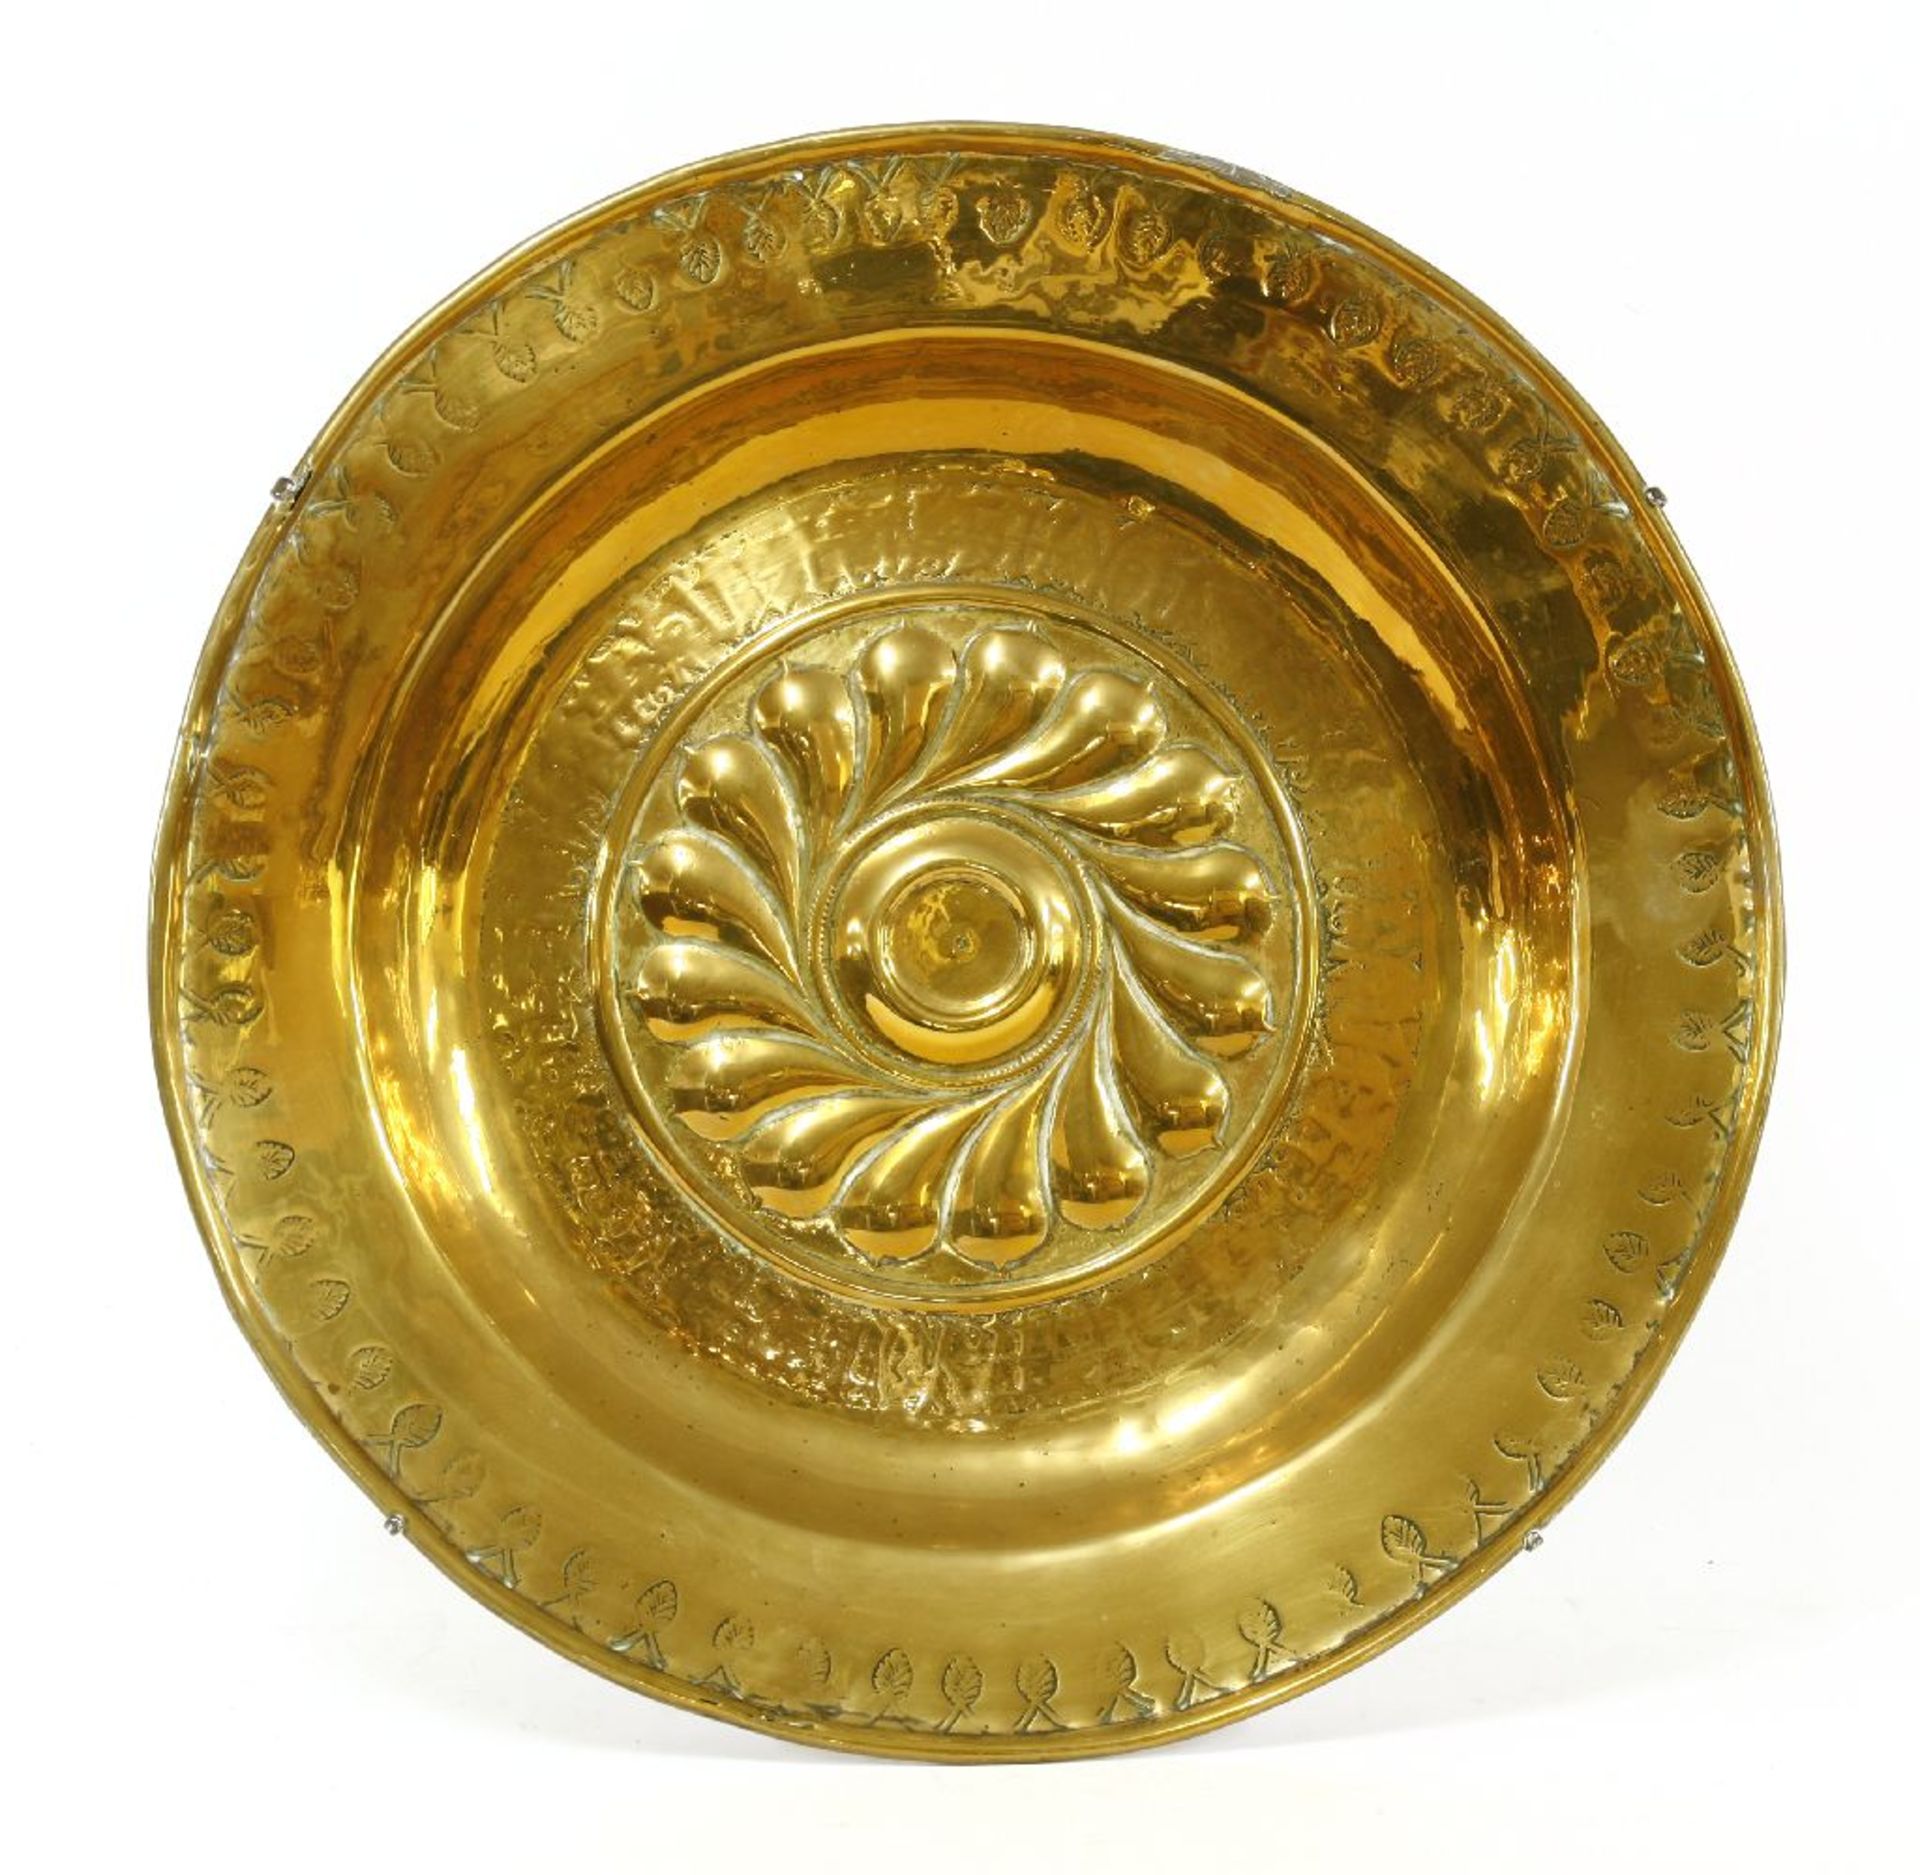 A brass alms dish,18th century, inscription worn, 38cm diameter Provenance: The property of a